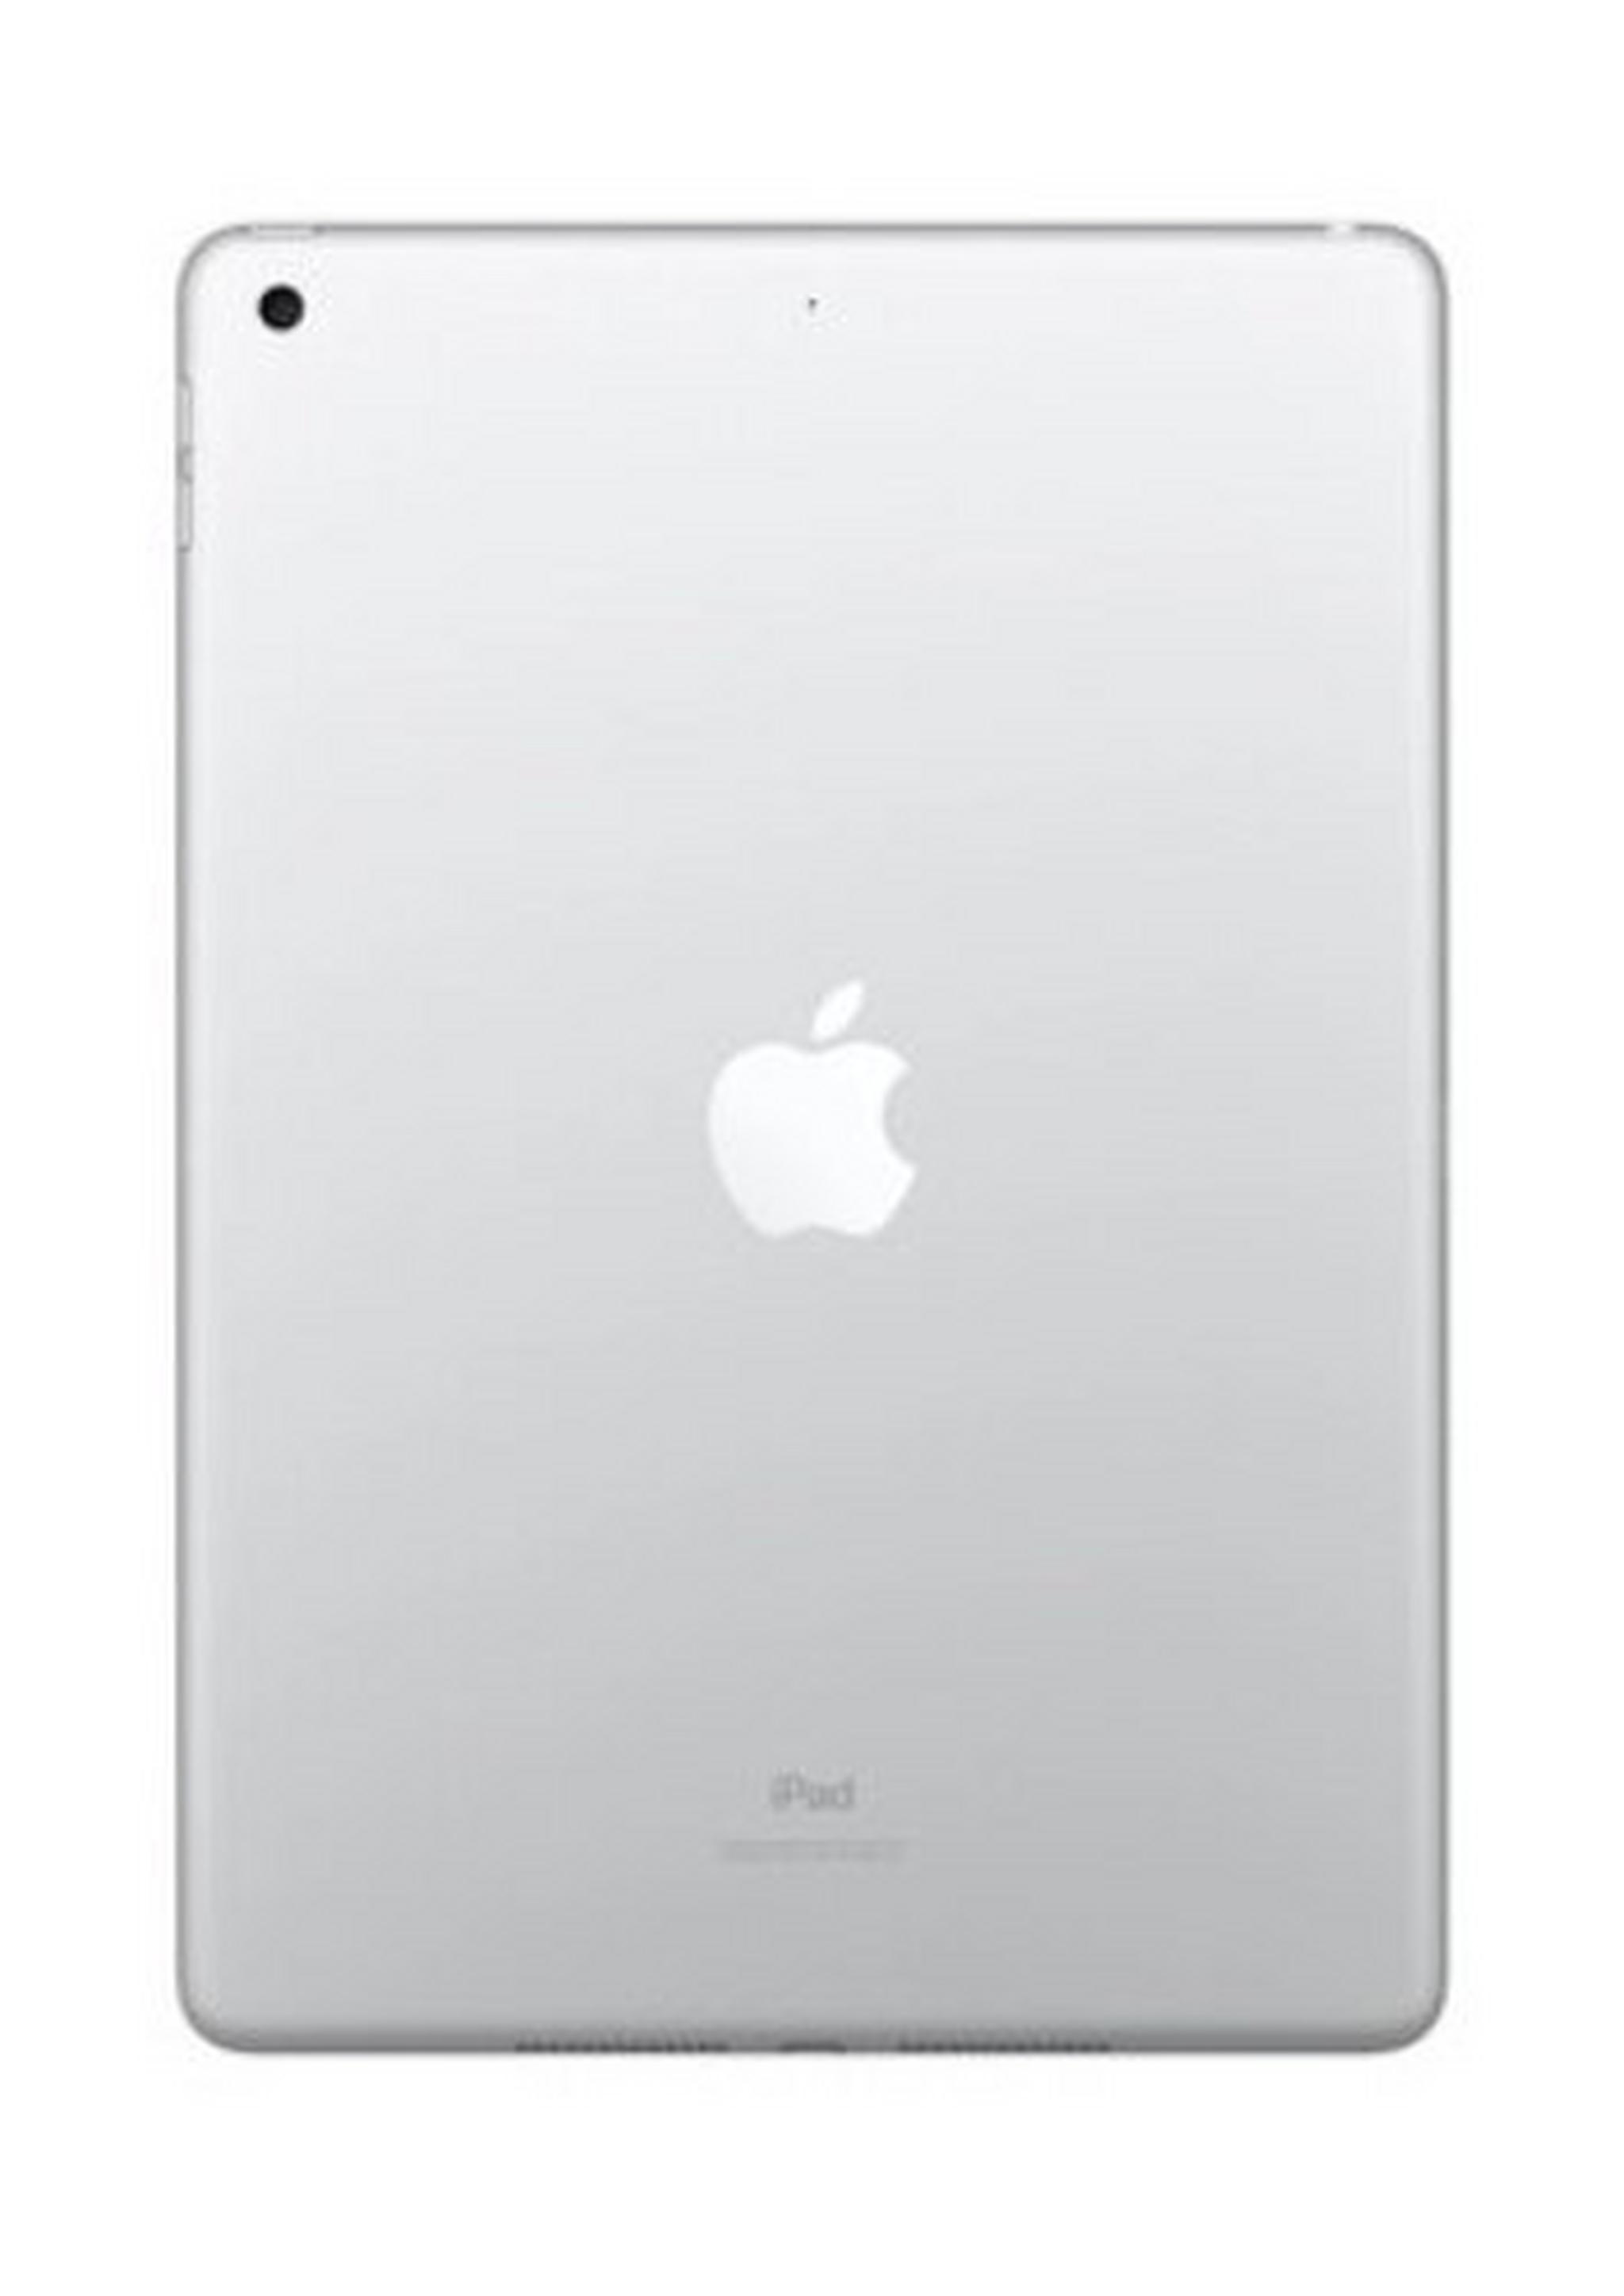 Apple iPad 8 32GB 10.2-inch 4G Tablet - Silver